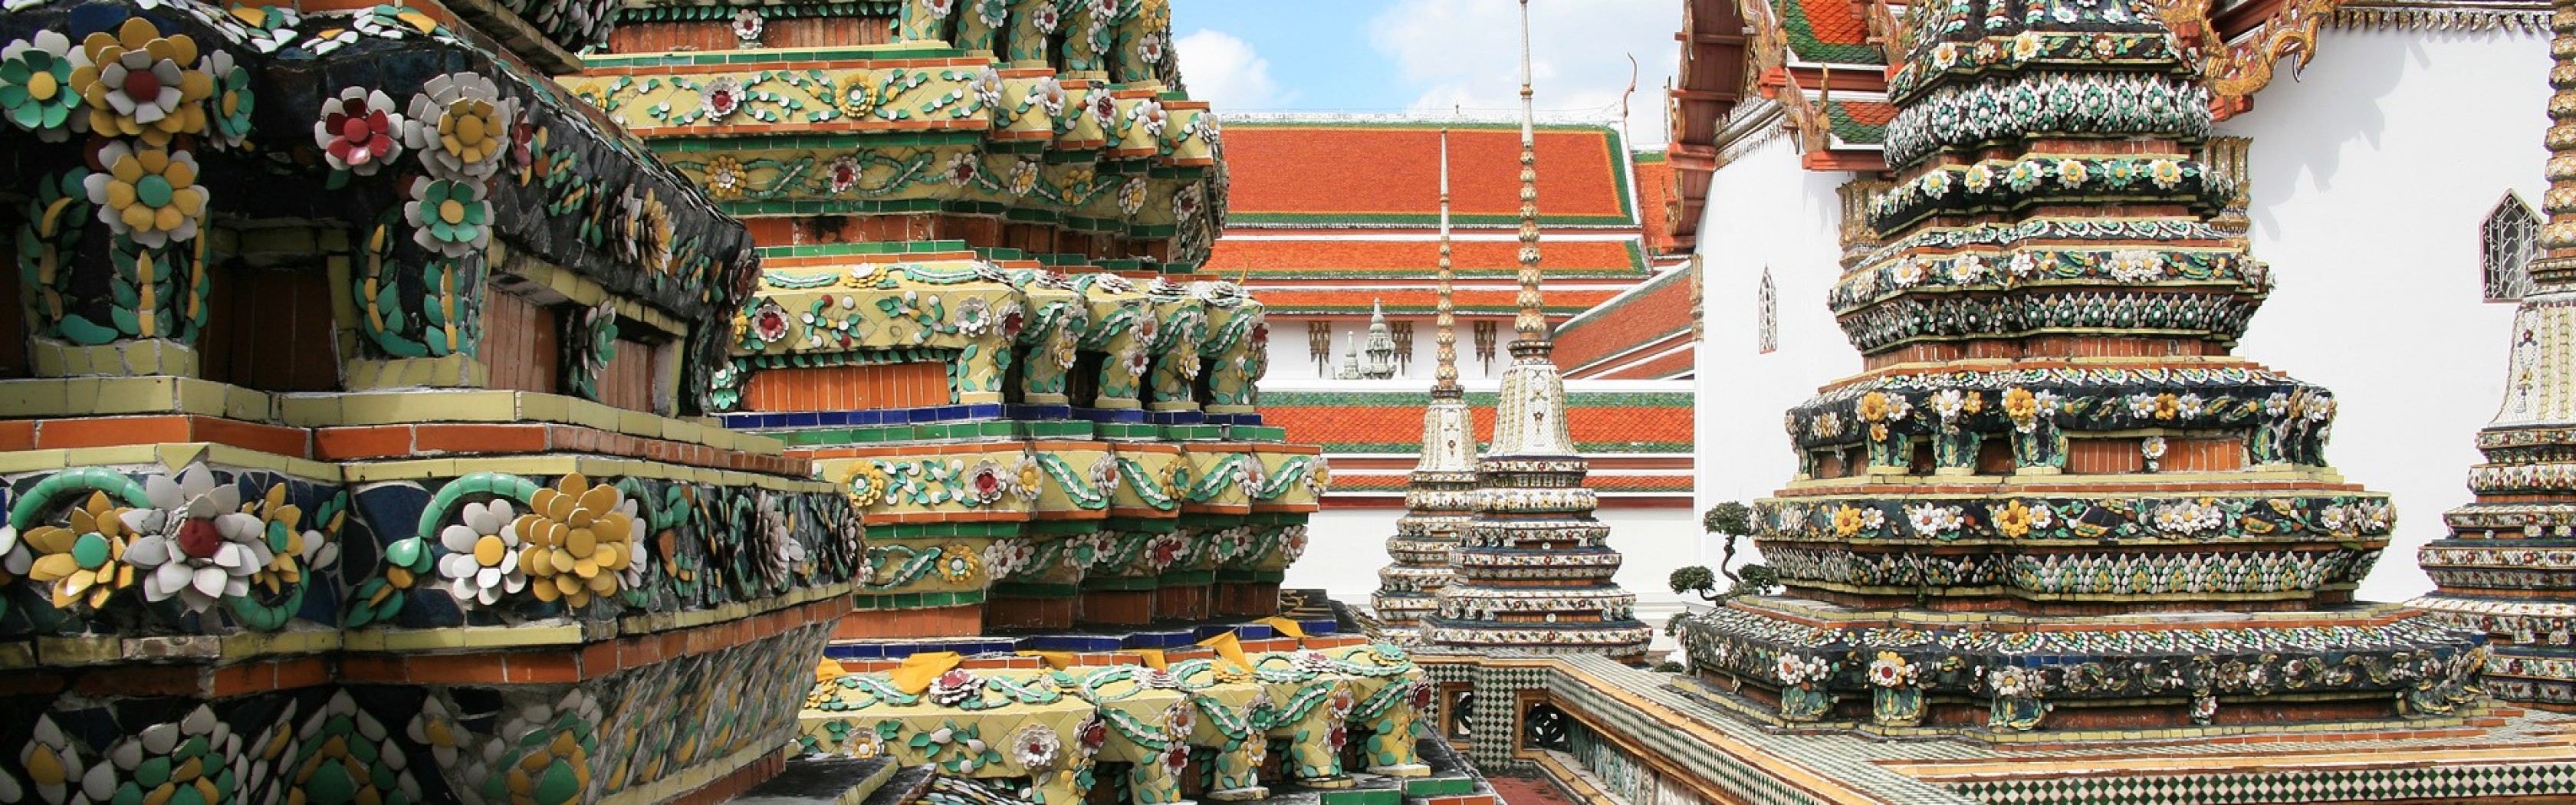 bangkok temple 3360x1050